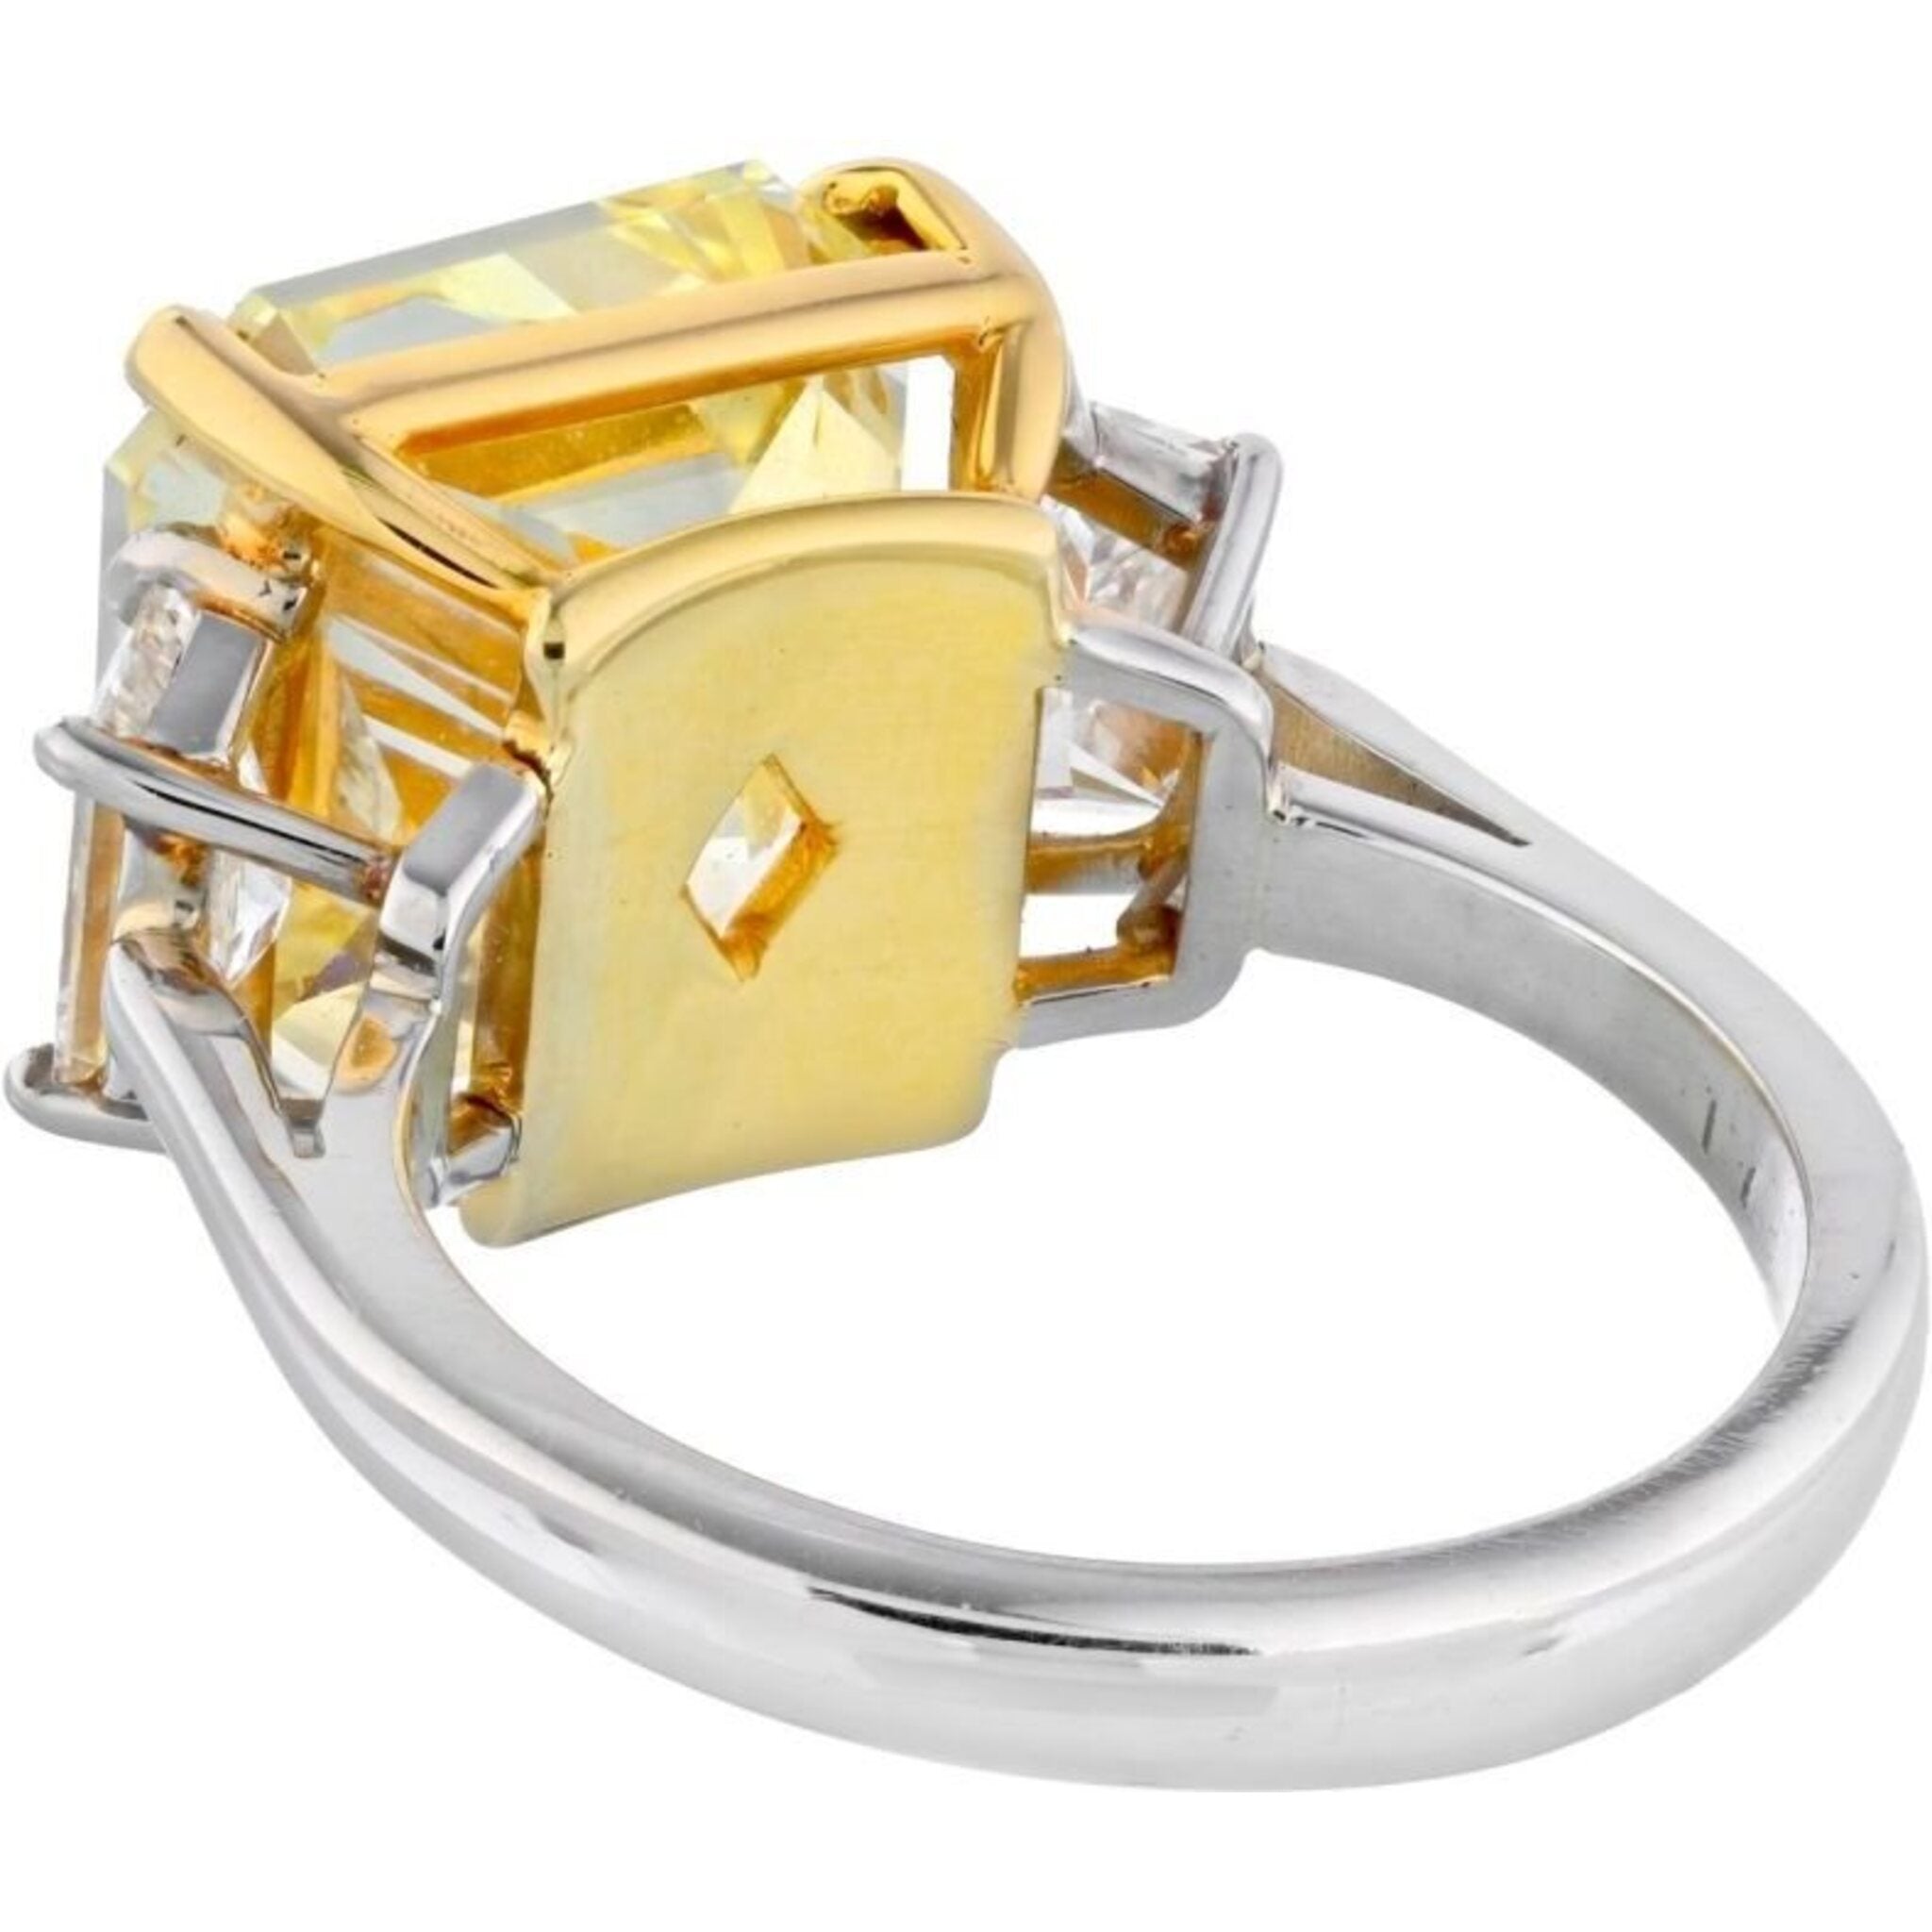 Alson Jewelers on LinkedIn: #howclevelandsaysido #diamonds #alsonjewelers